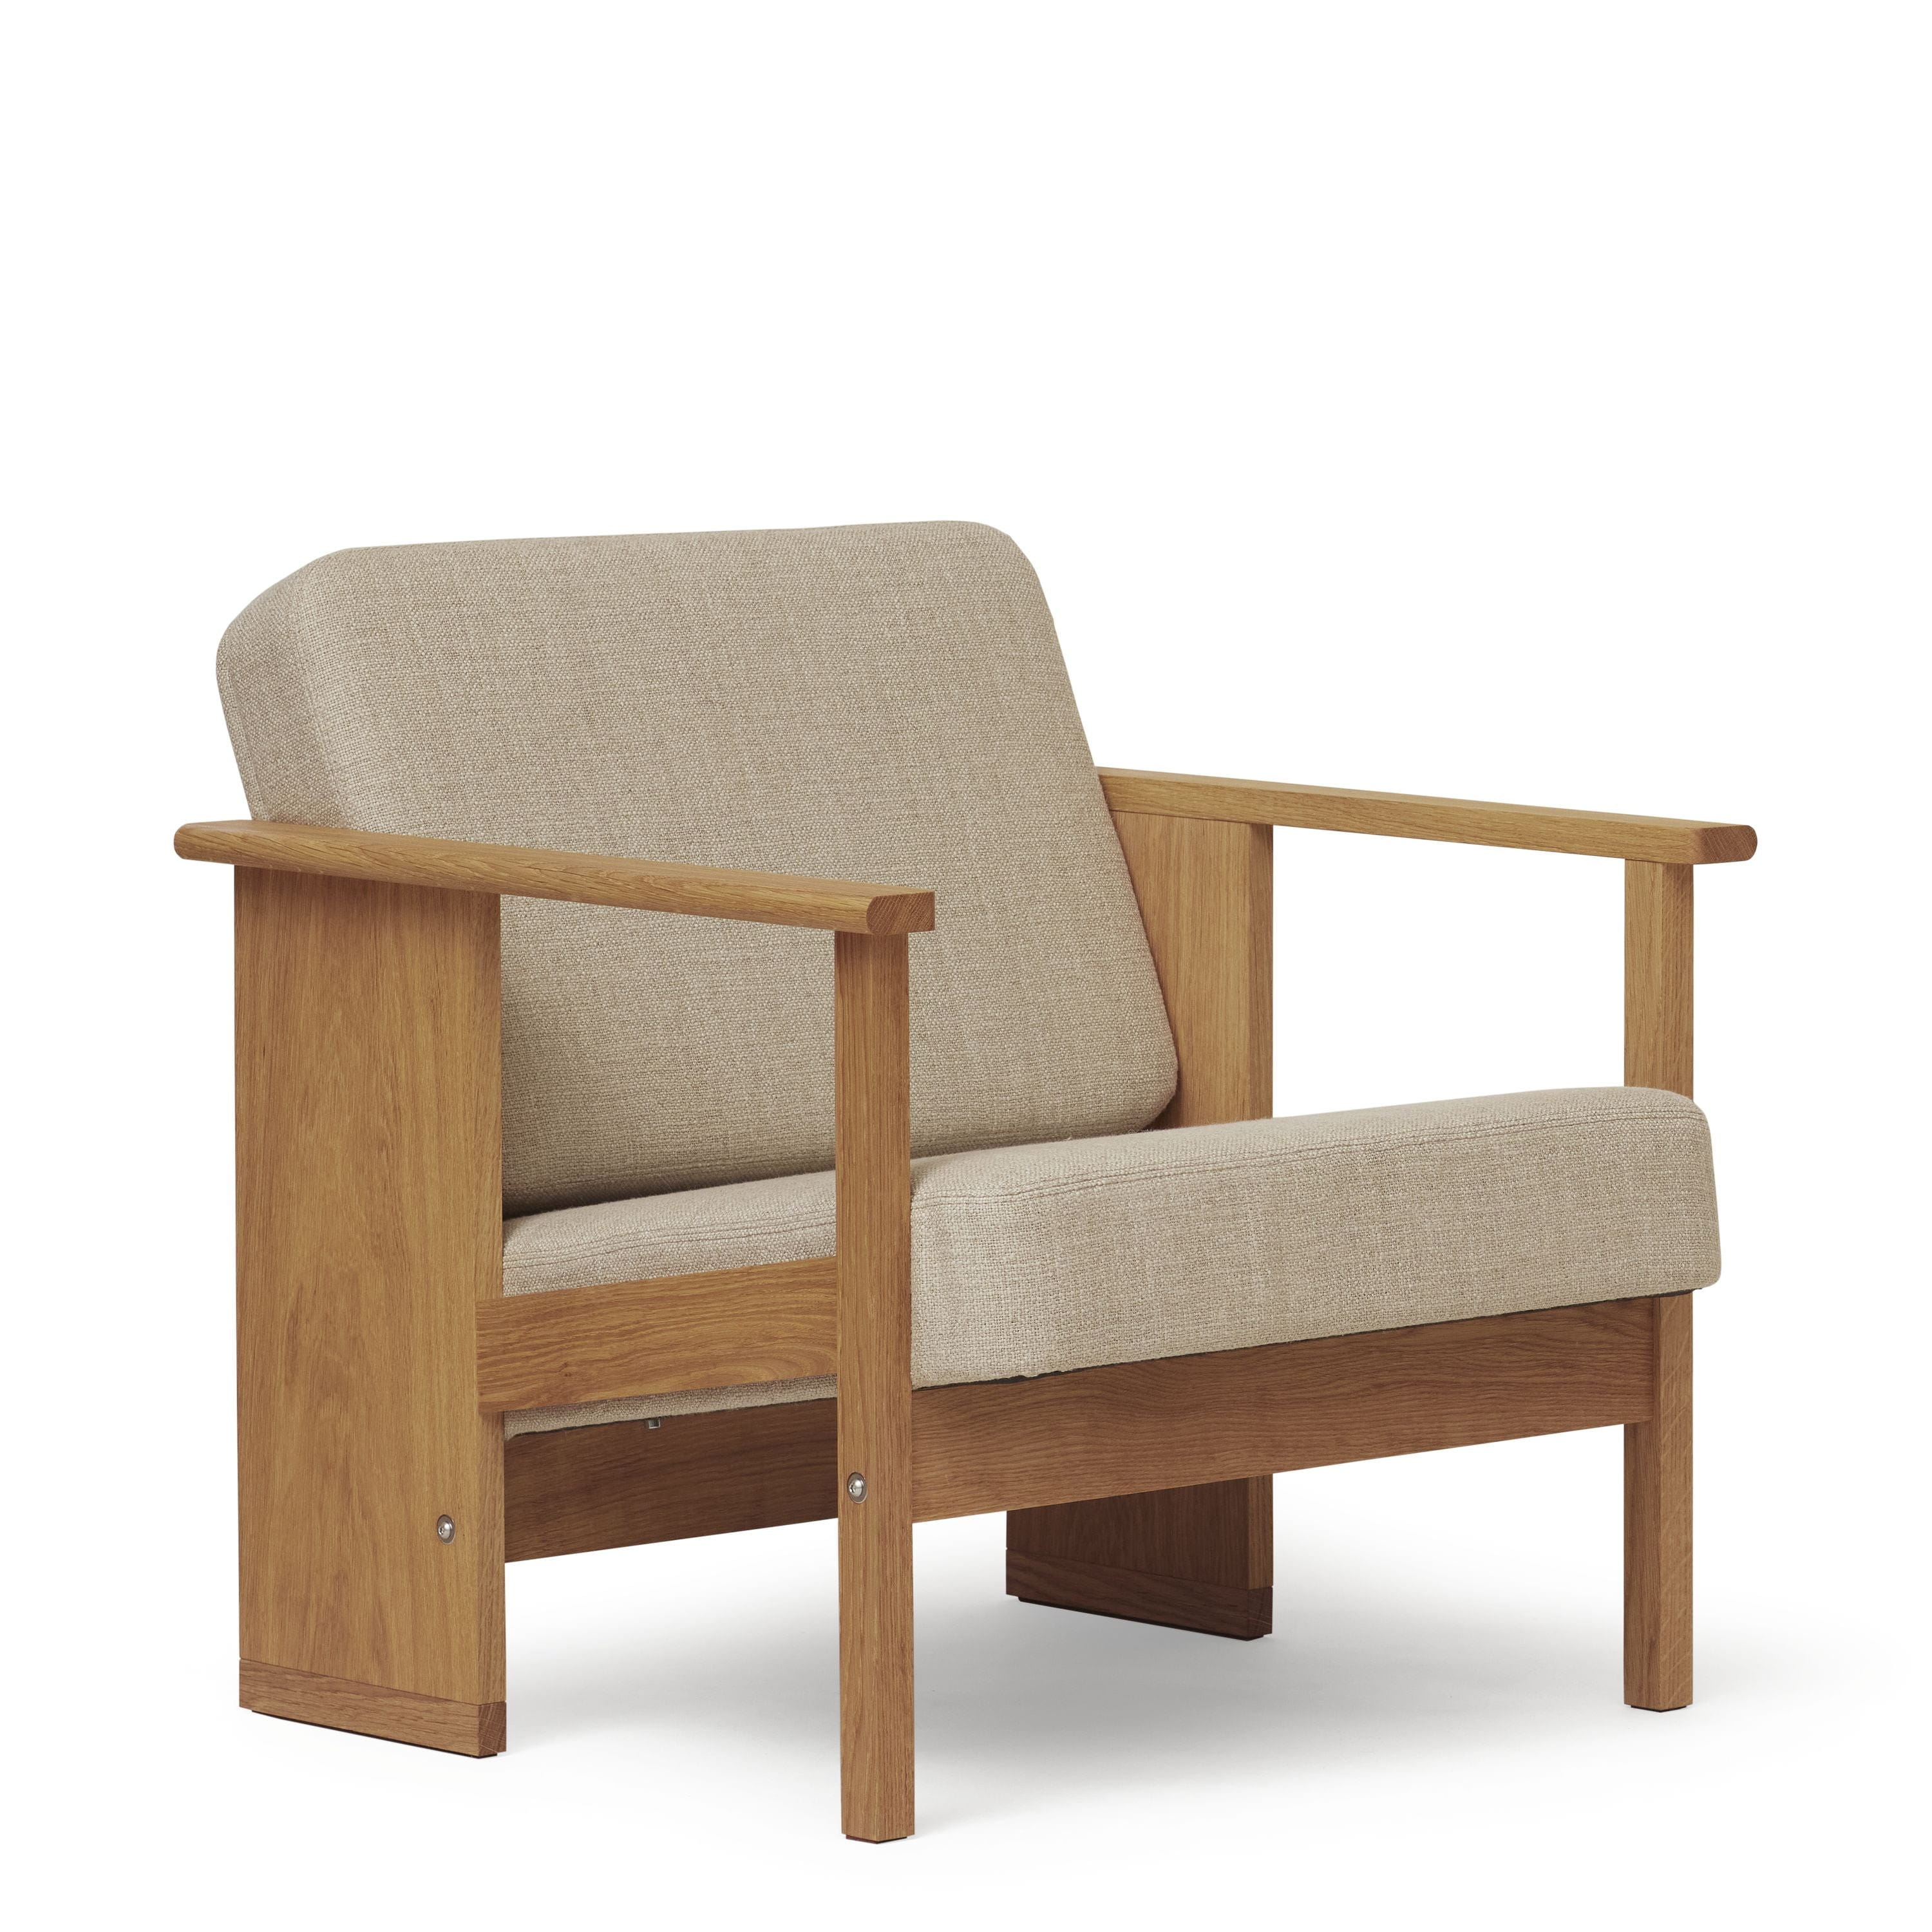 Form & Refine Block Lounge Chair. Oak